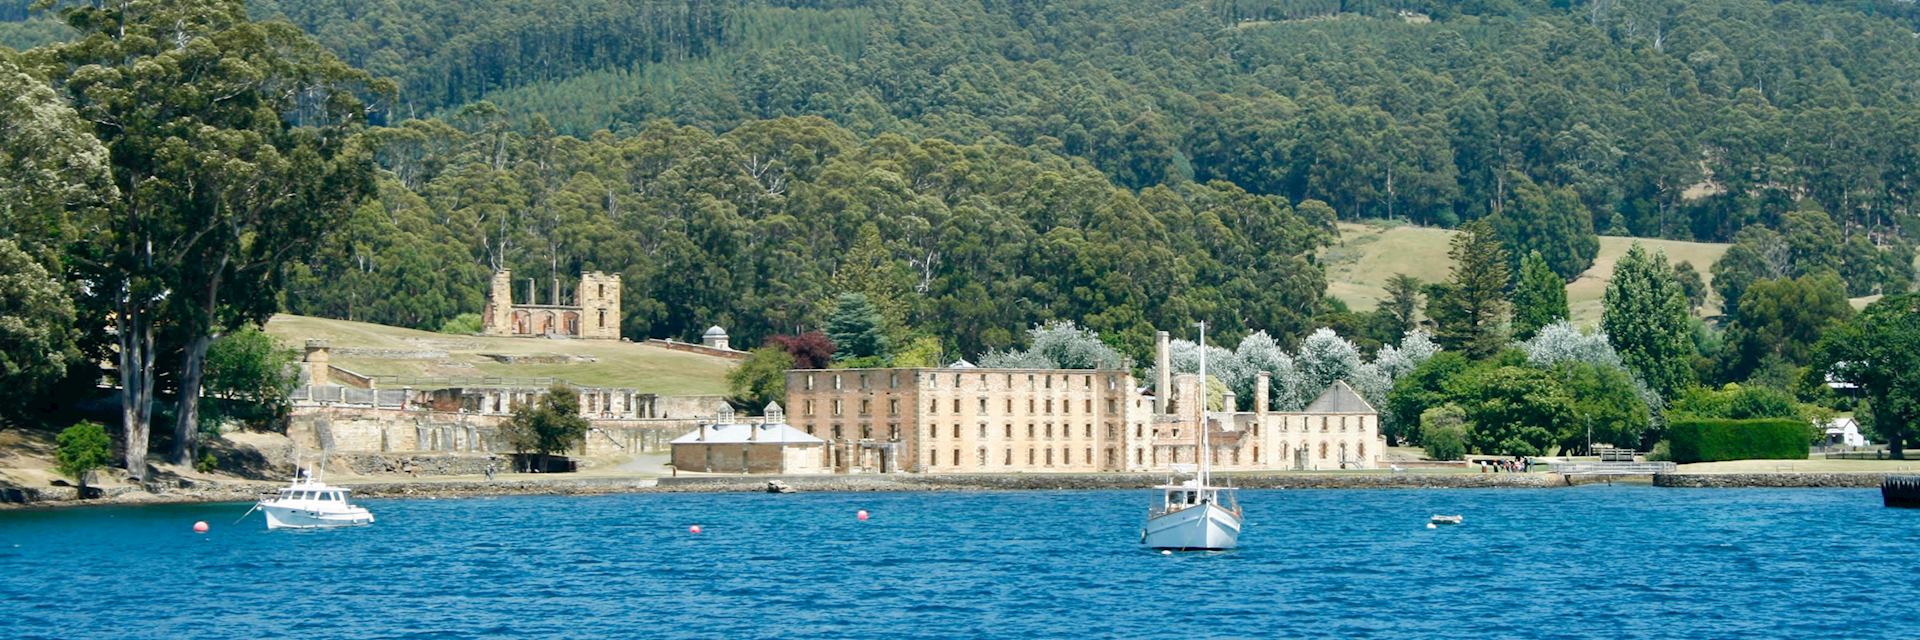 Historic prison and ruins in Port Arthur, Tasmania, Australia